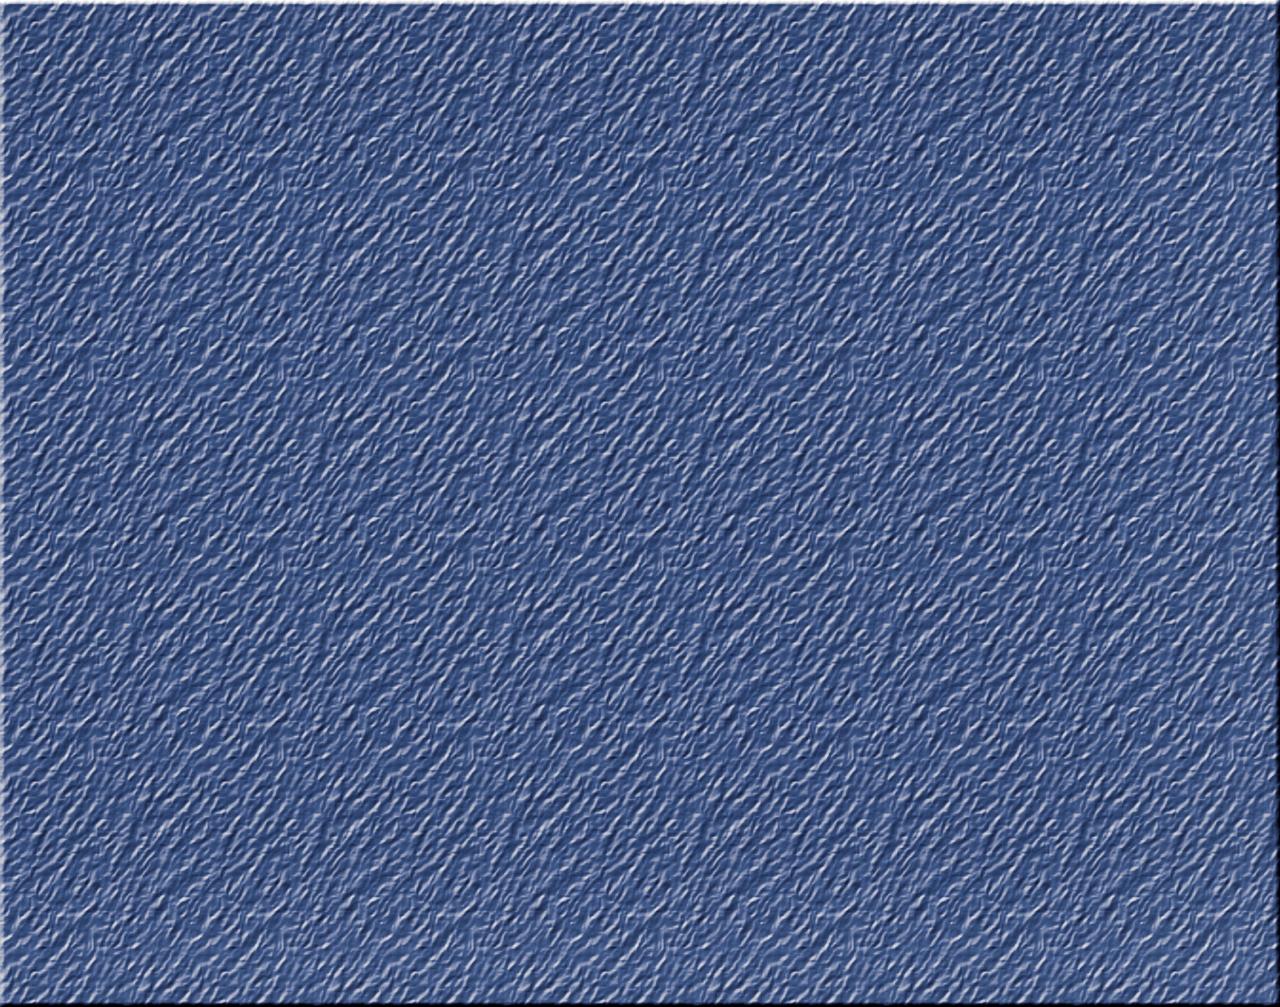 Solid Blue Background HD Wallpaper 5 Full. Wallpaperiz